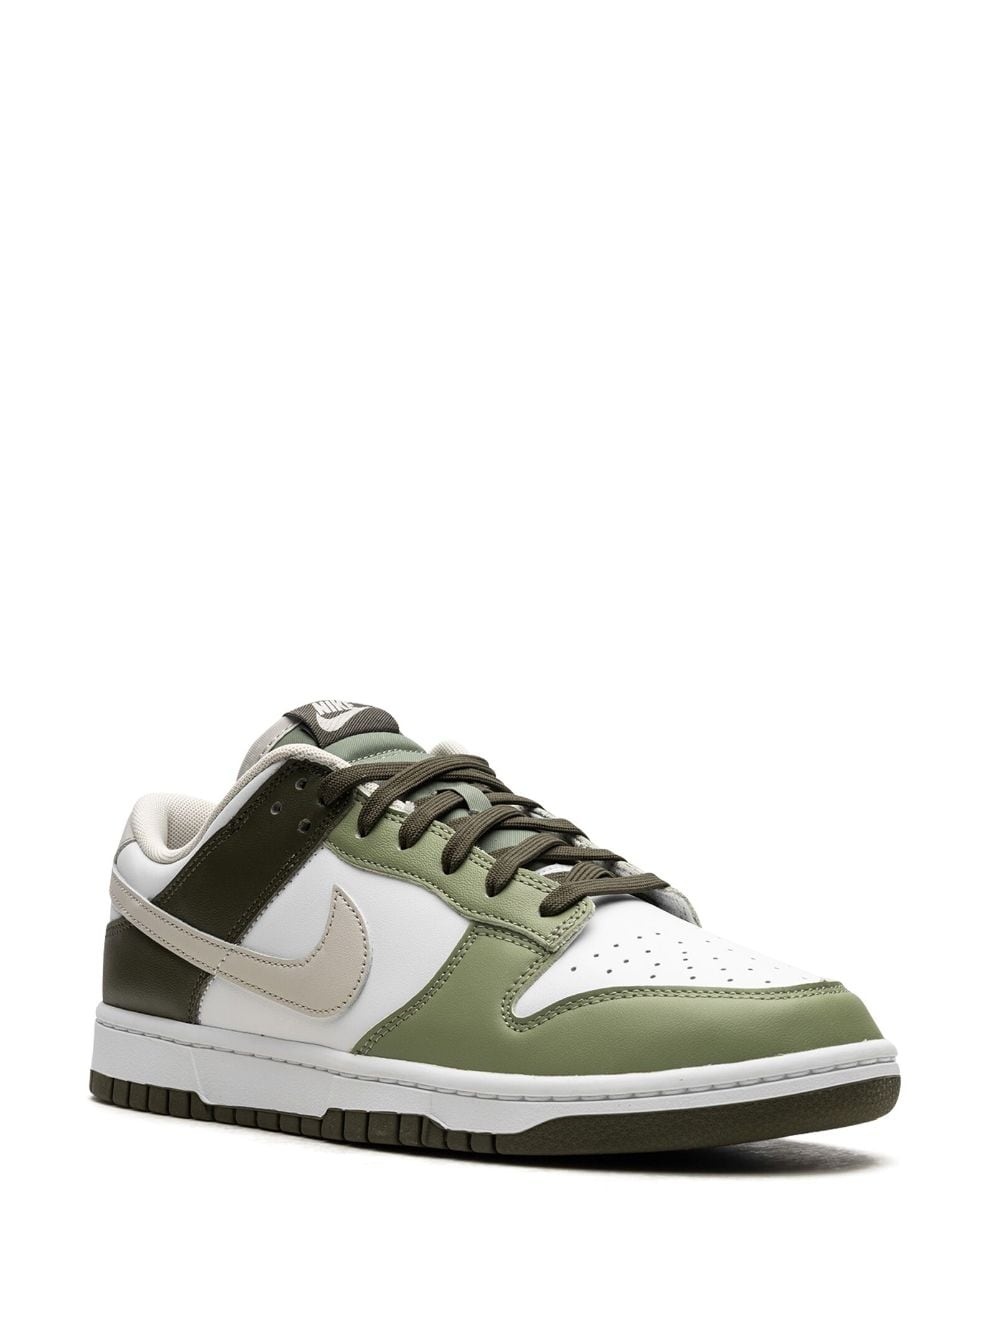 Dunk Low "Oil Green" sneakers - 2